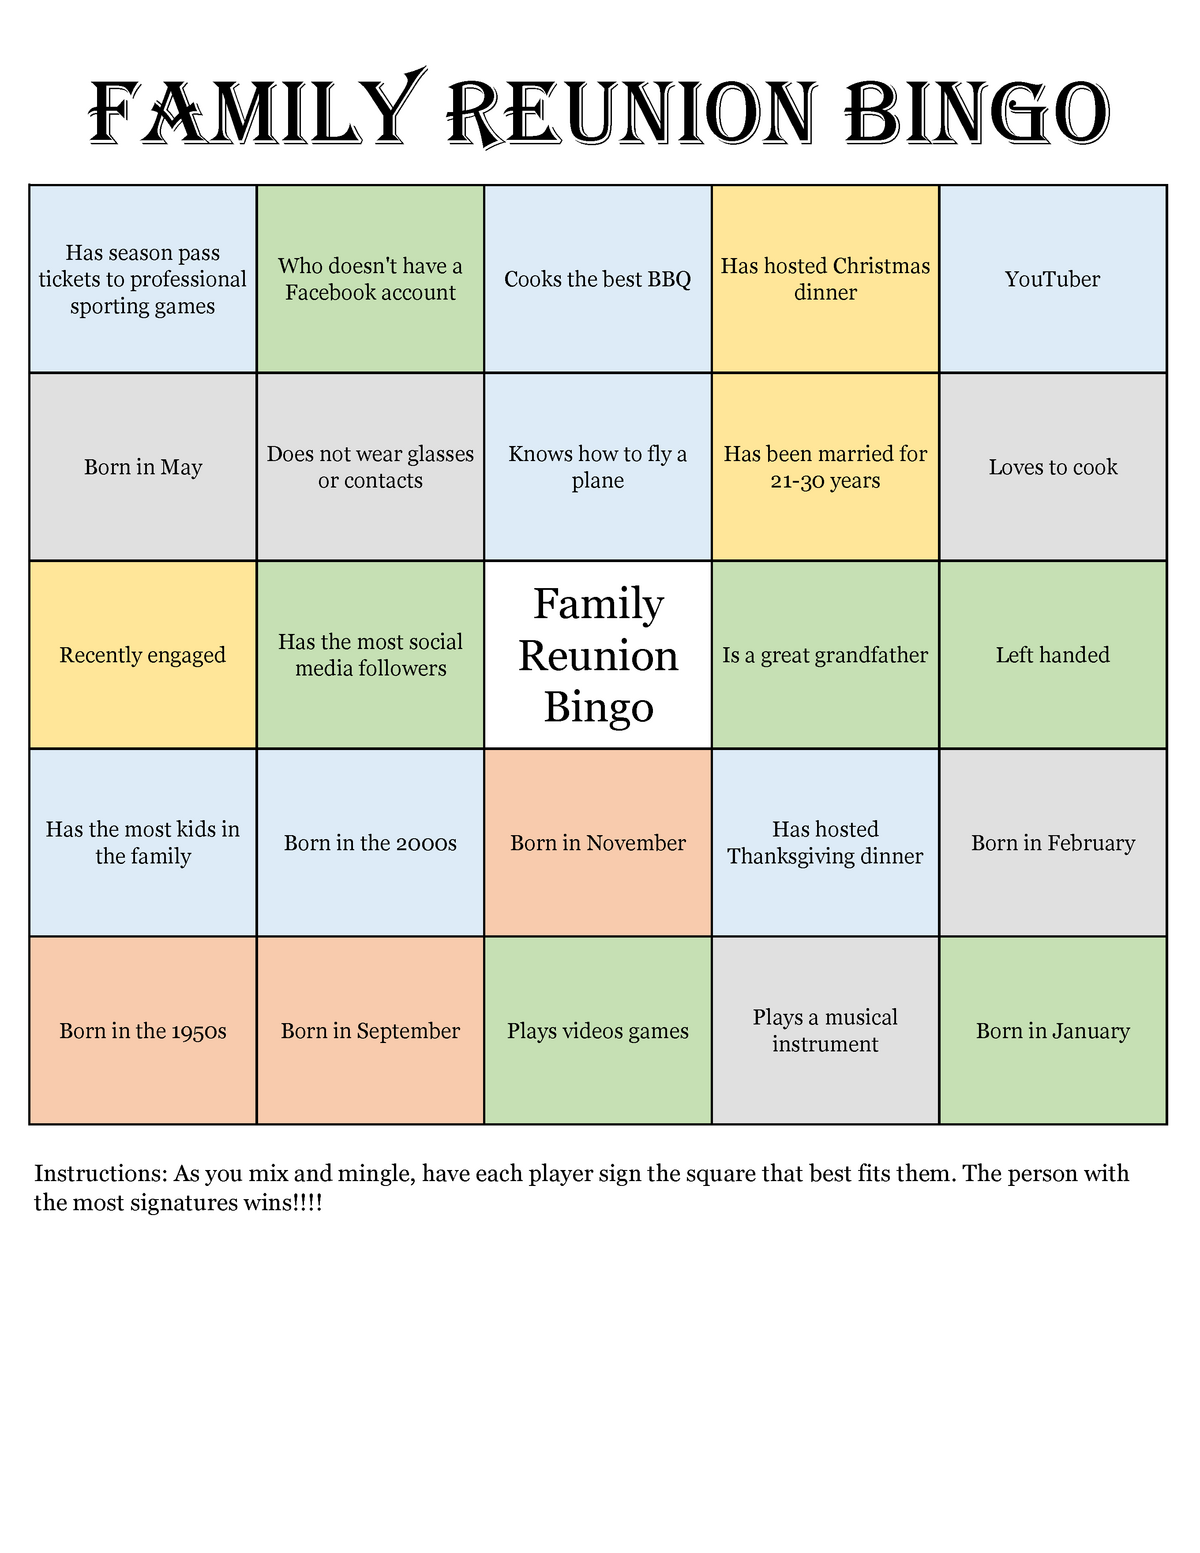 Family Reunion Bingo Mixand Mingle Style-40cards - NUR 4040 - NSU - Studocu